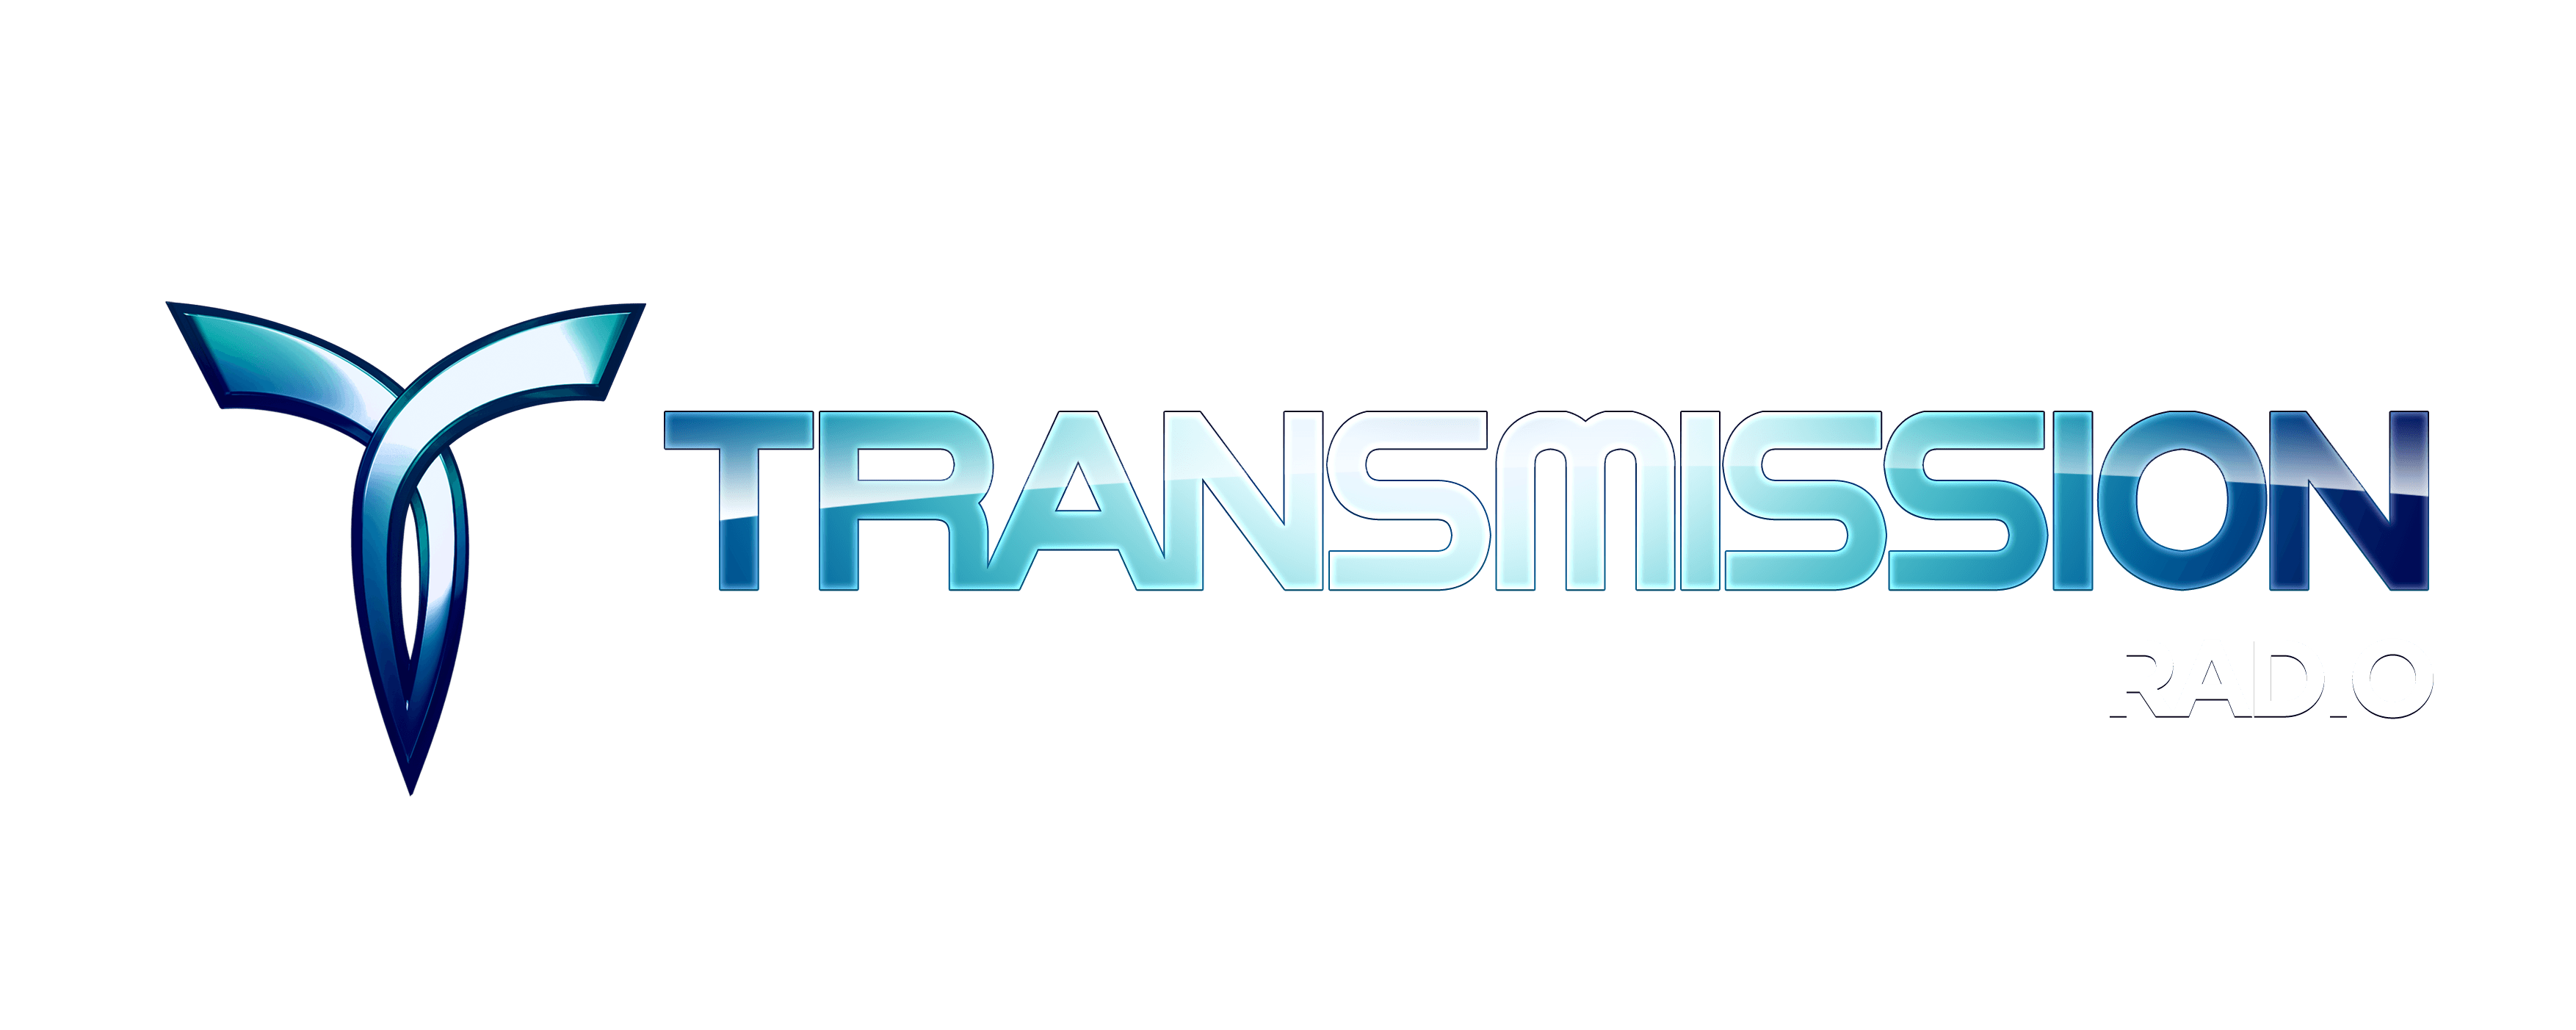 Transmission Logo - Radio